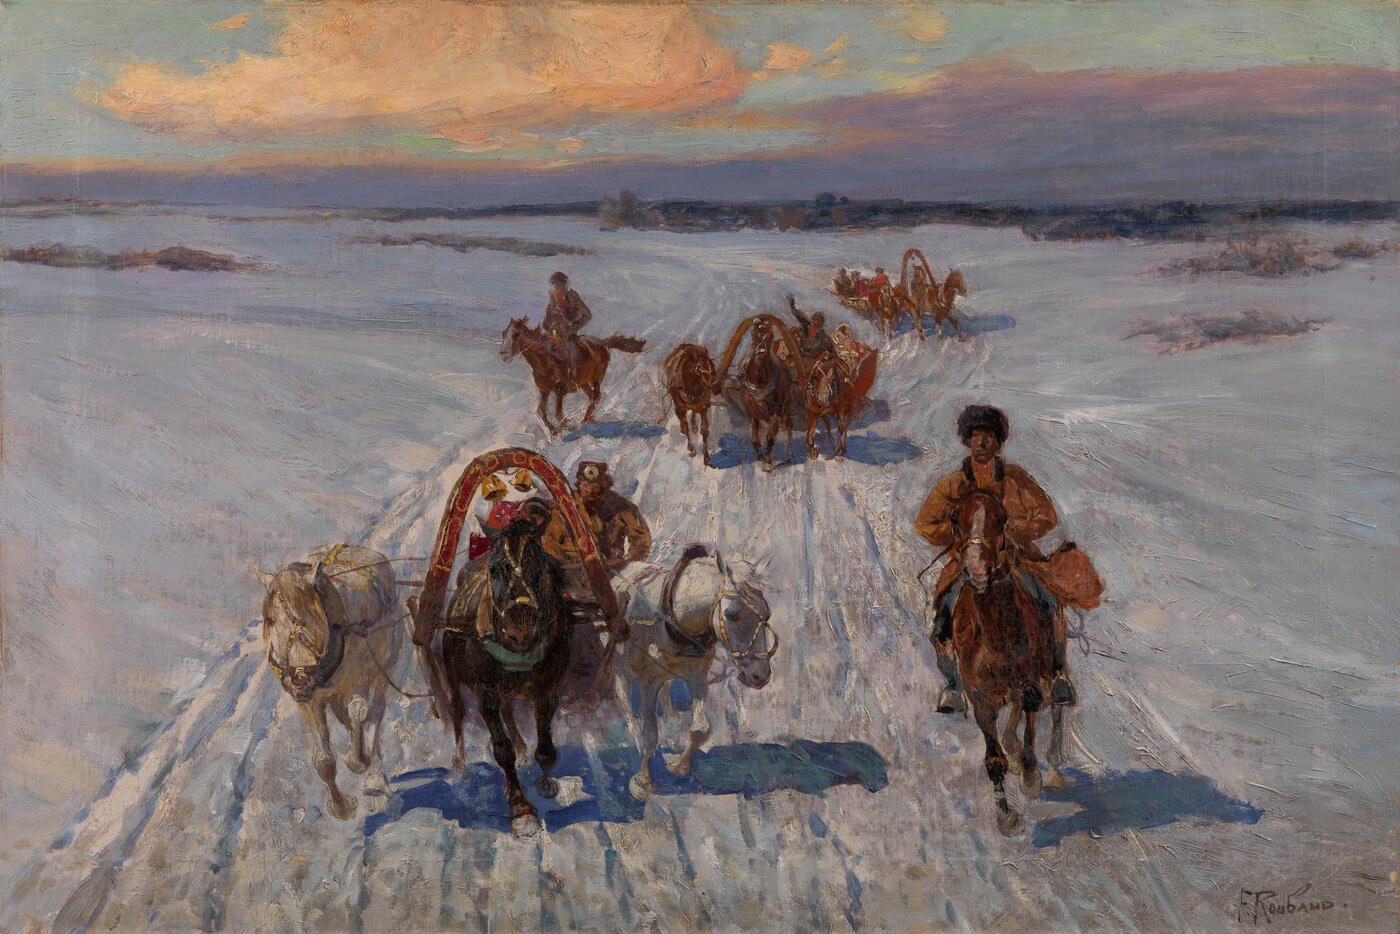 Peasants on Troikas in Winter